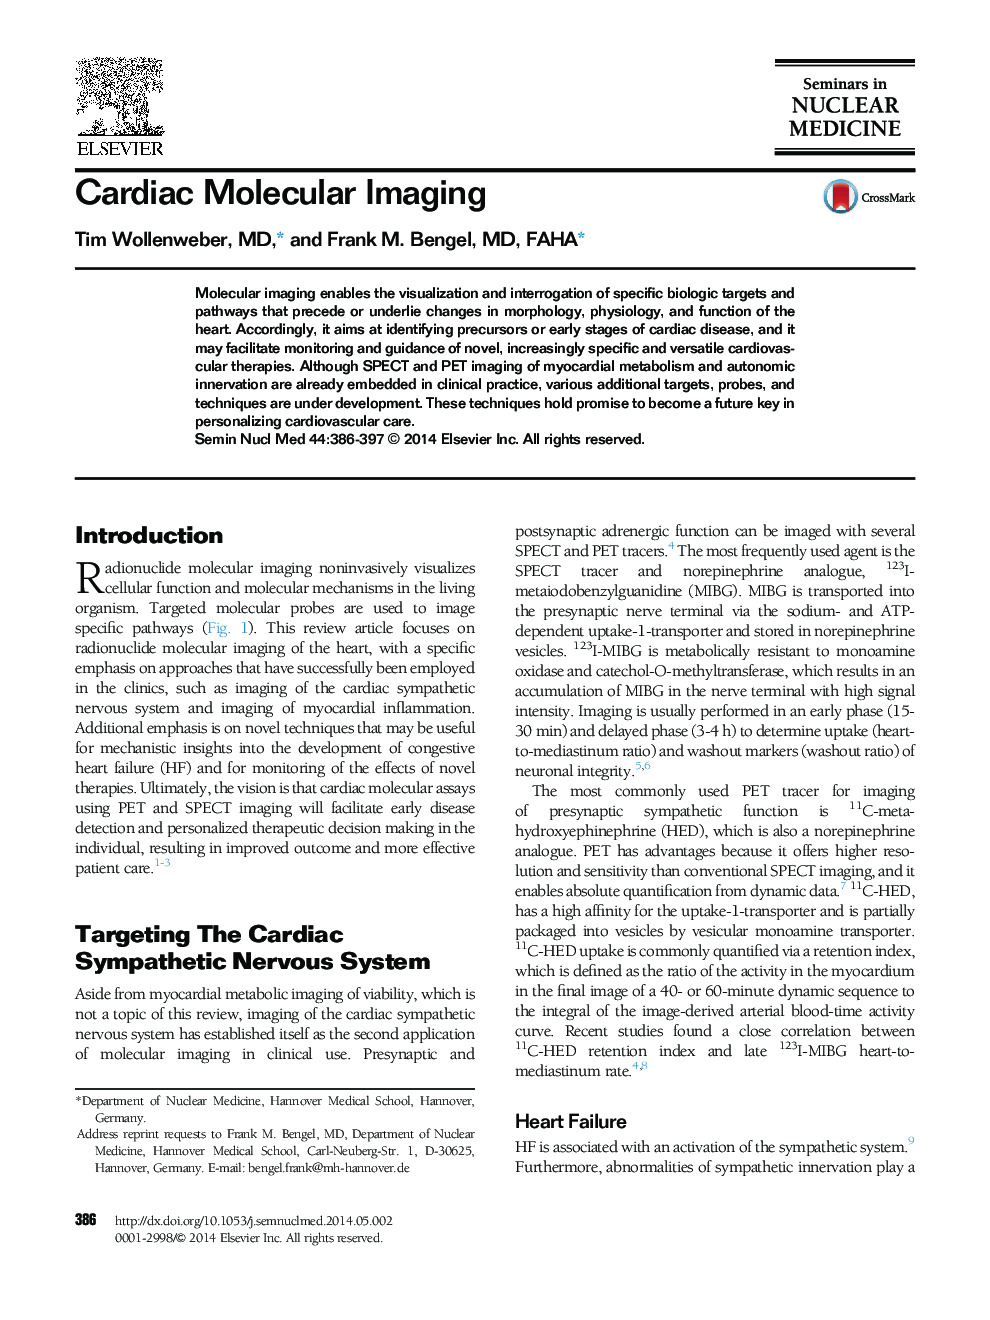 Cardiac Molecular Imaging